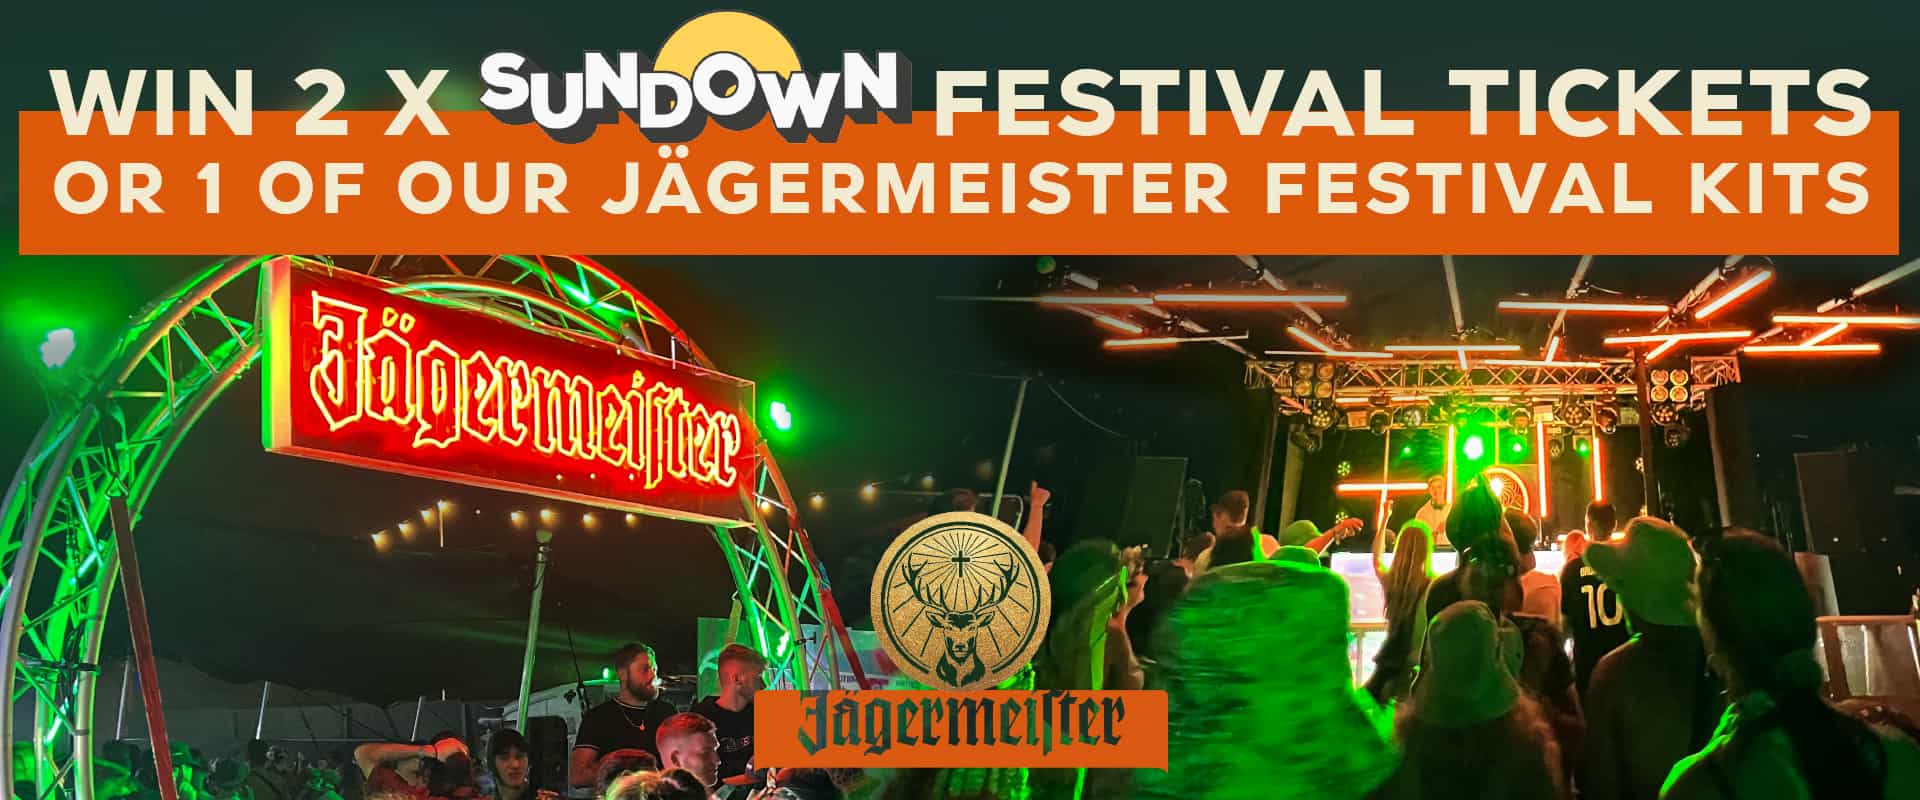 Win 2 tickets to Sundown Festival with Jagermeister and Zinc & Popworld Fleet